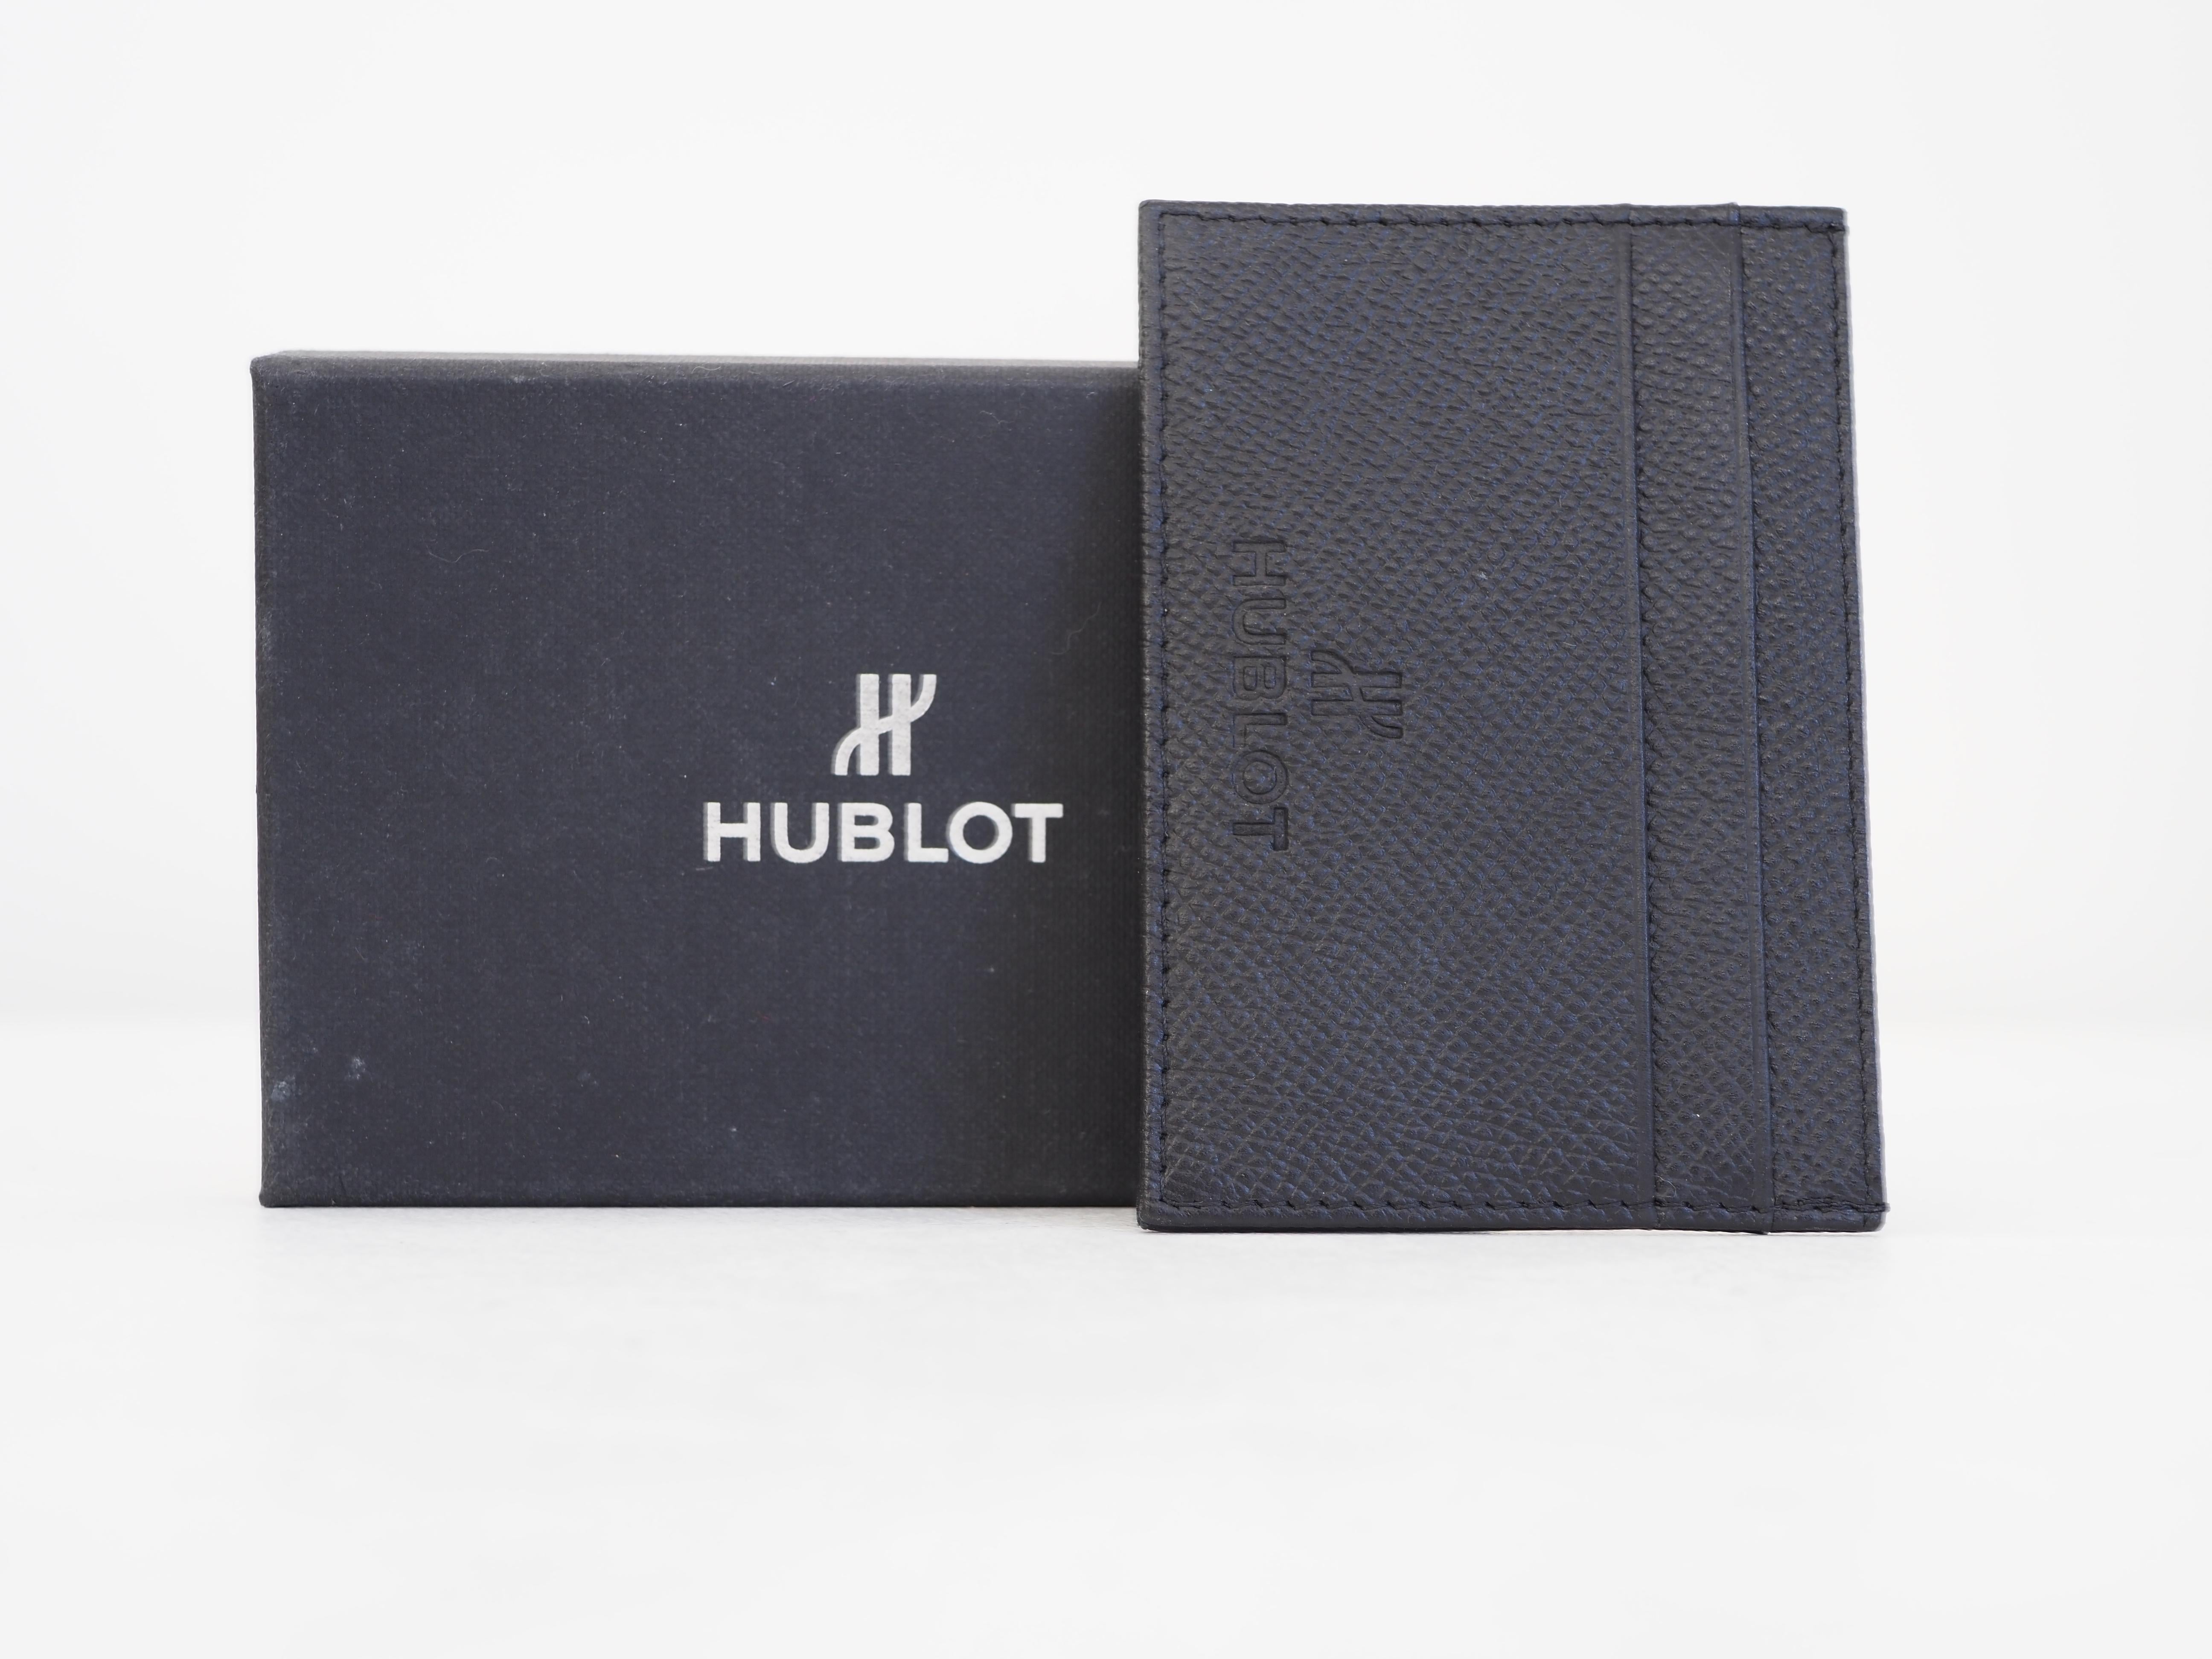 Hublot black leather cardholder still with box For Sale 1